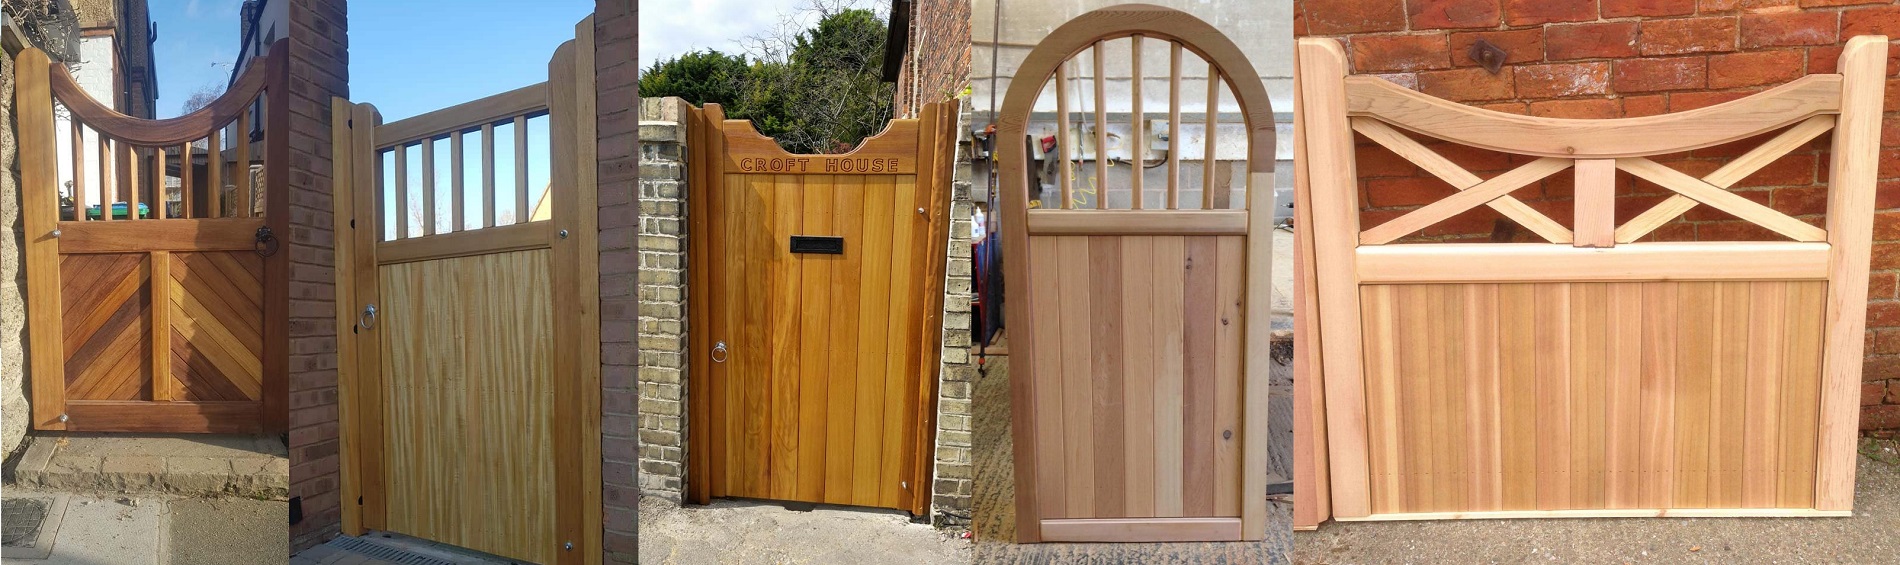 Hardwood garden gate designs